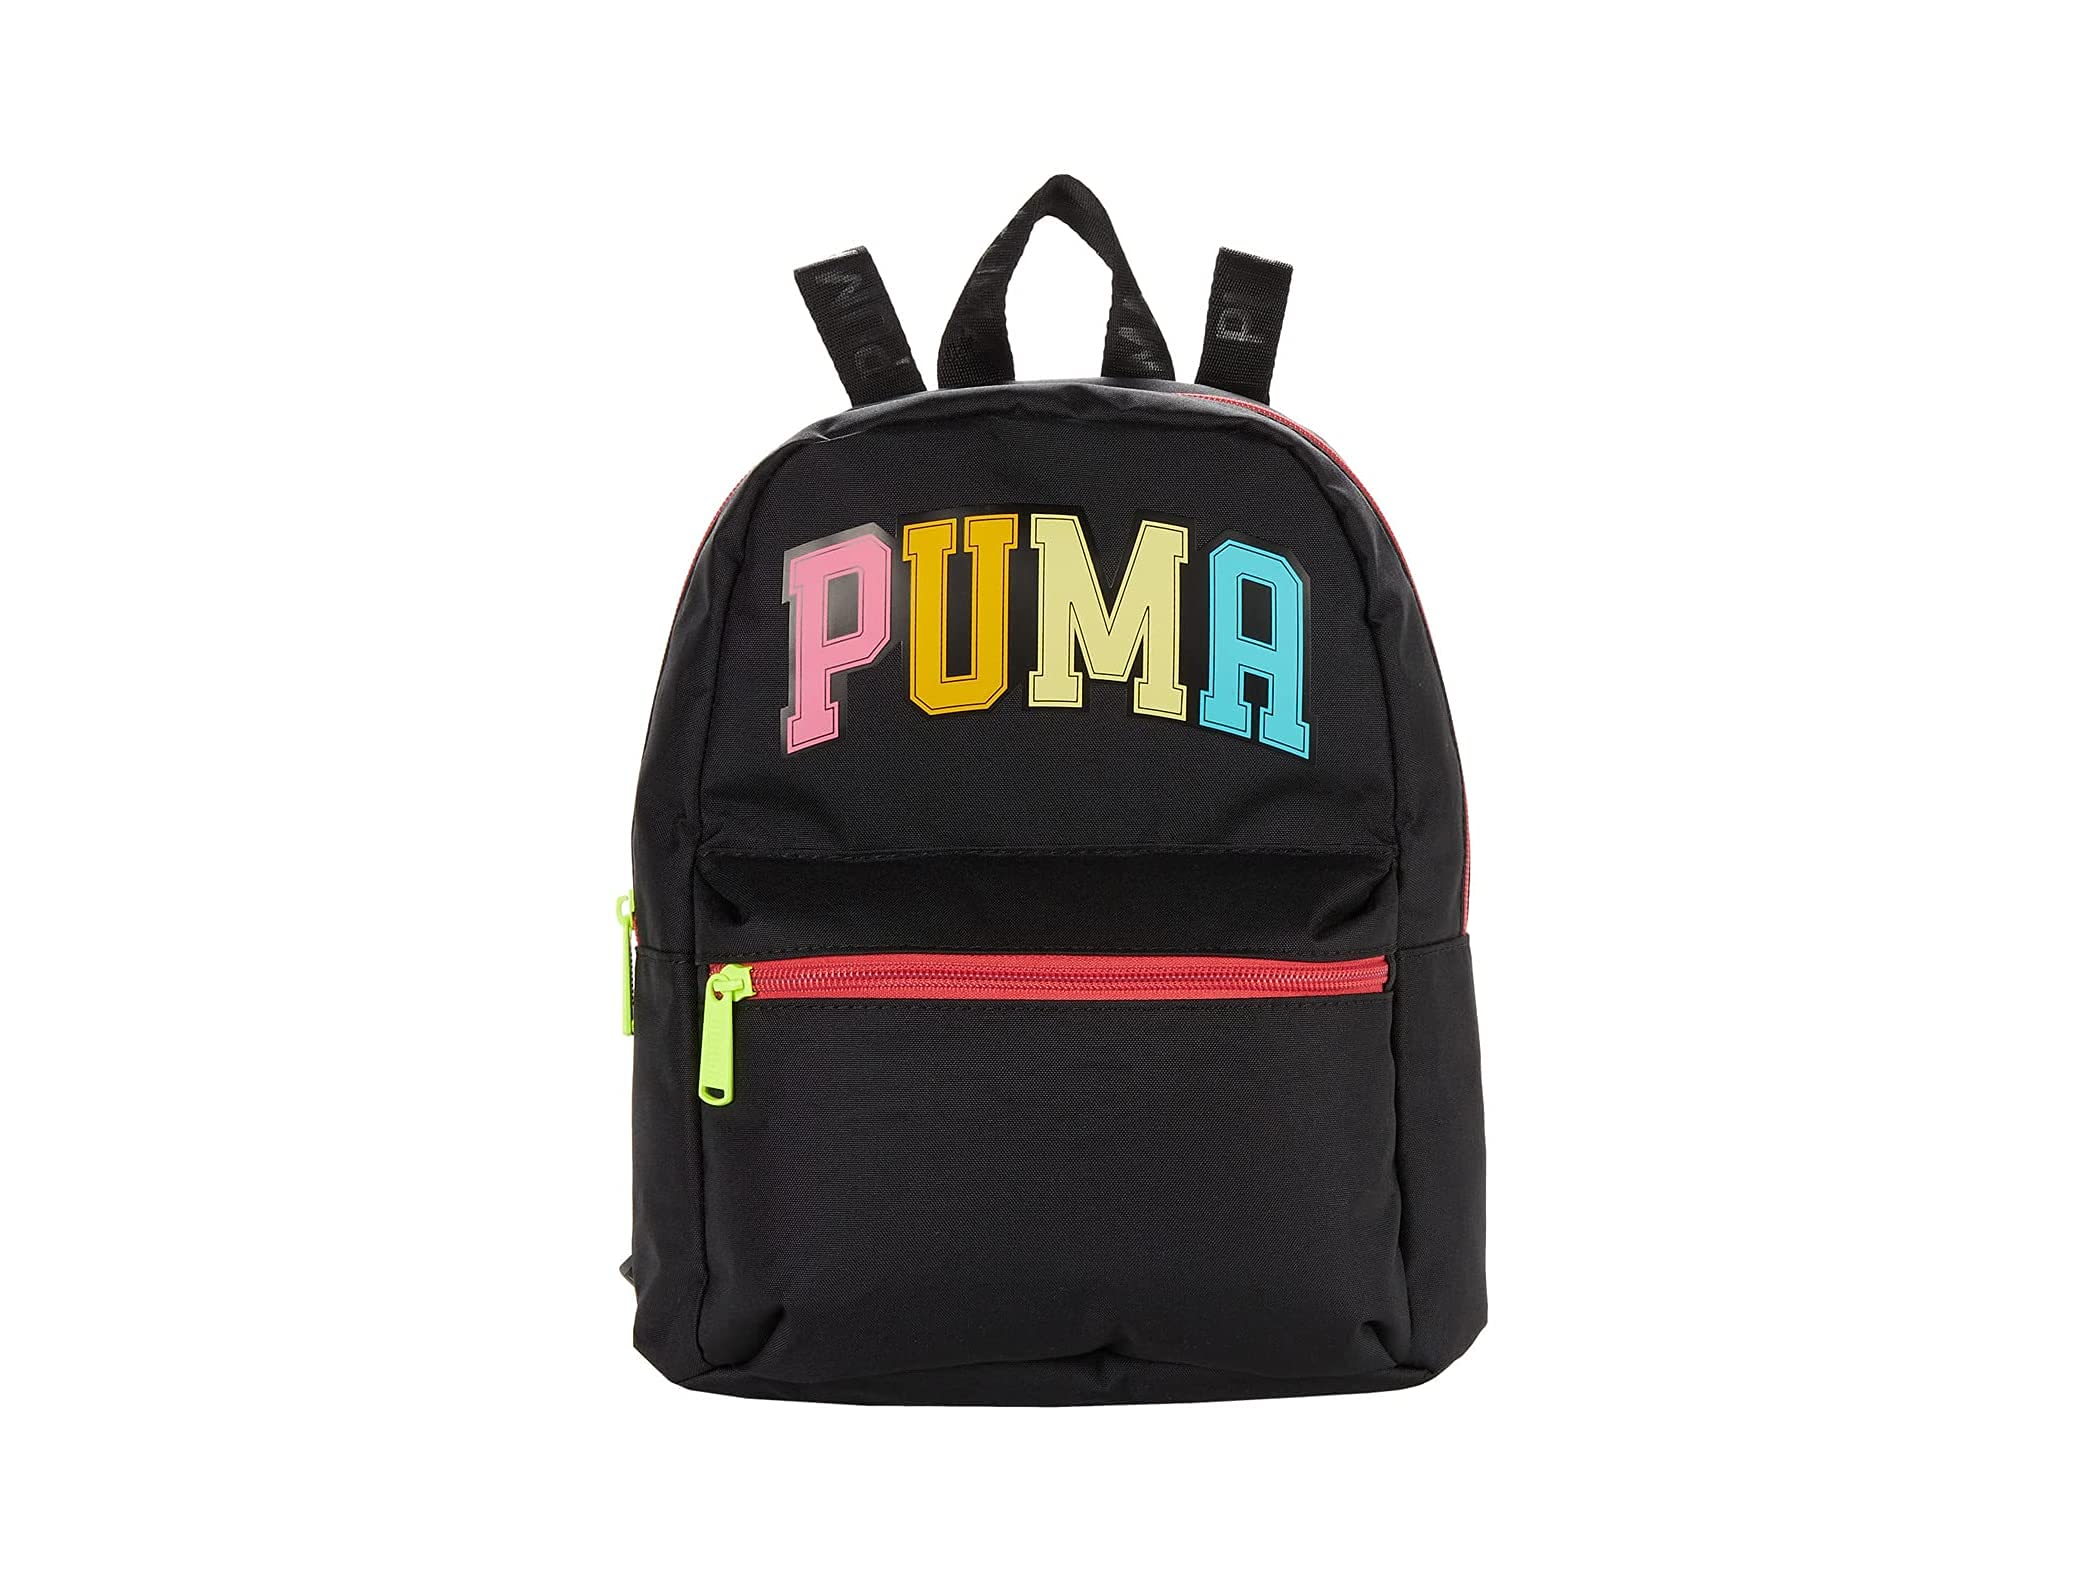 Puma Evercat Rhythm Mini Backpack - image 1 of 3